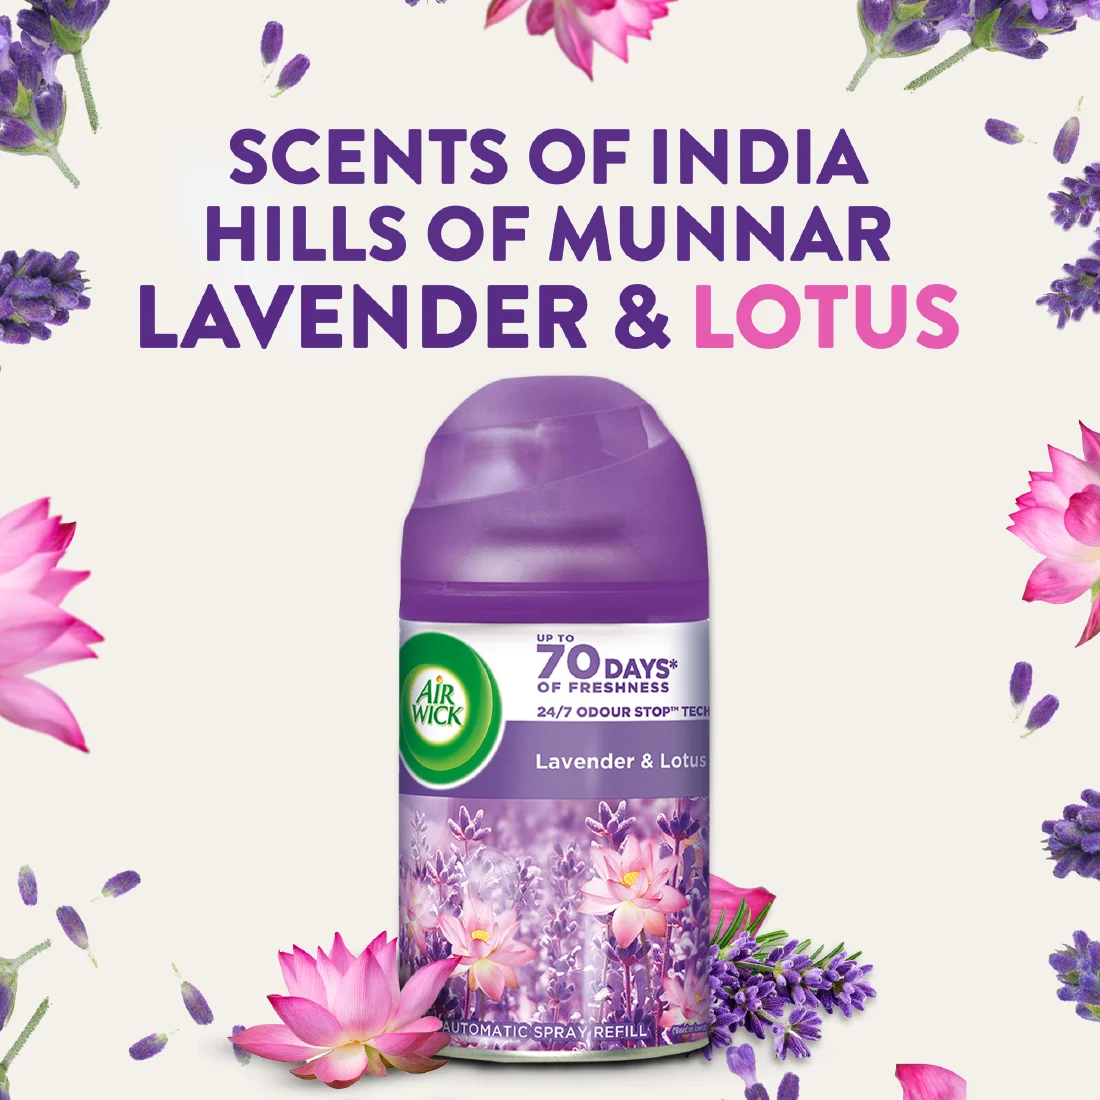 Air Wick Freshmatic Refill, Hill of Munnar, Lavender & Lotus